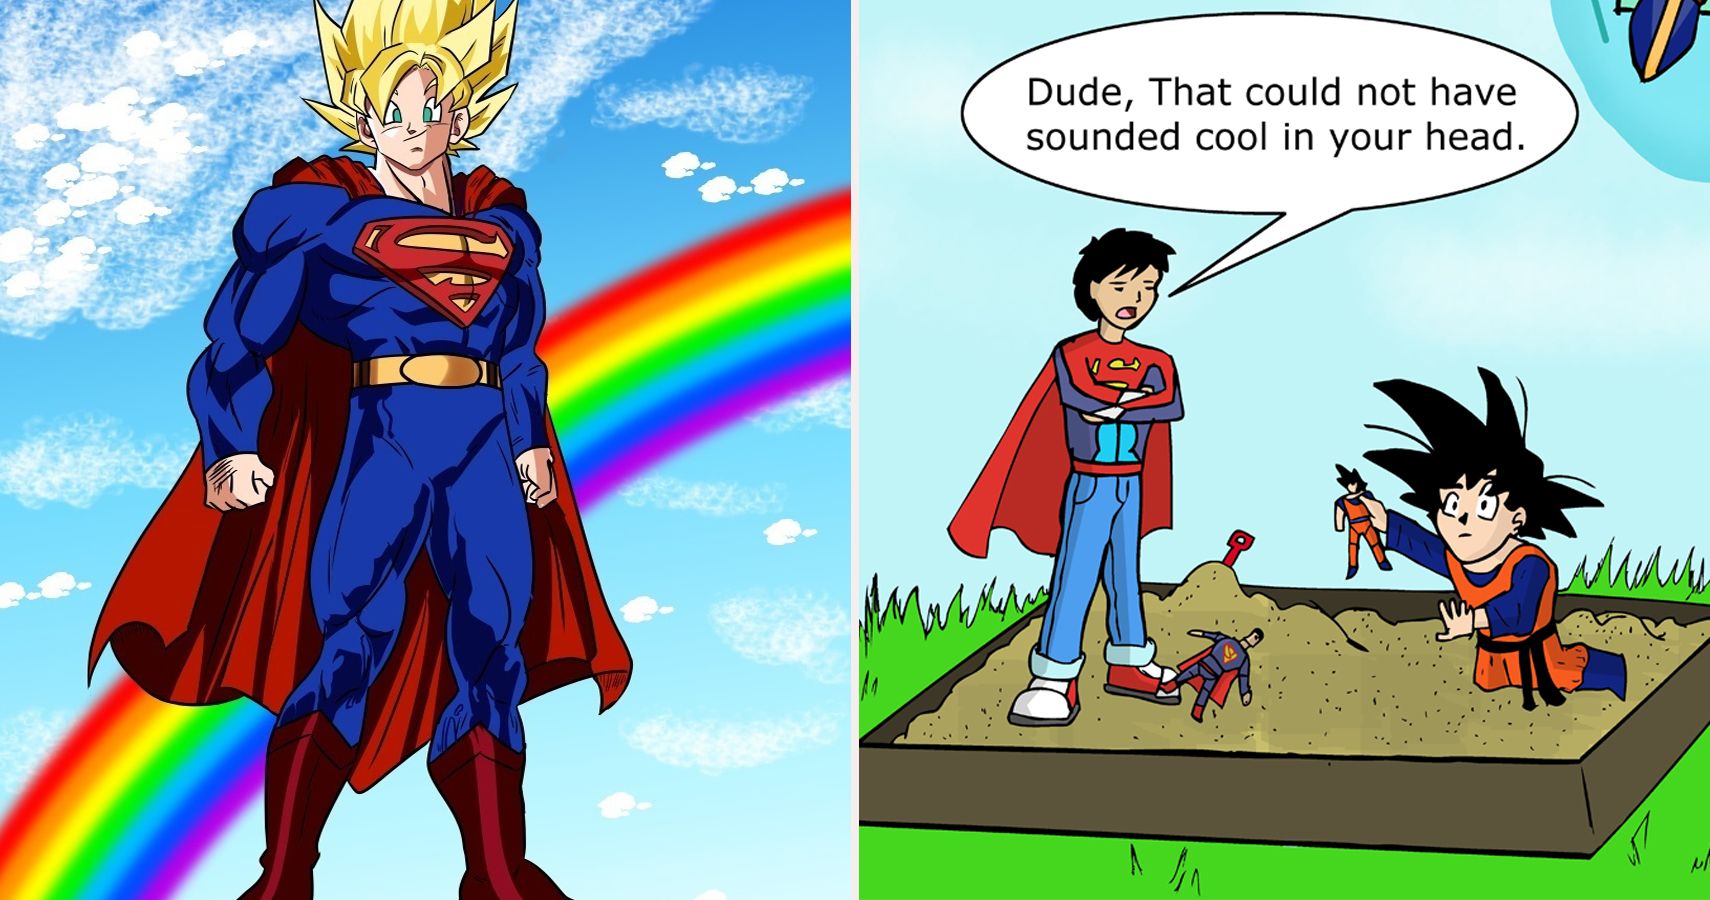 goku vs superman goku wins